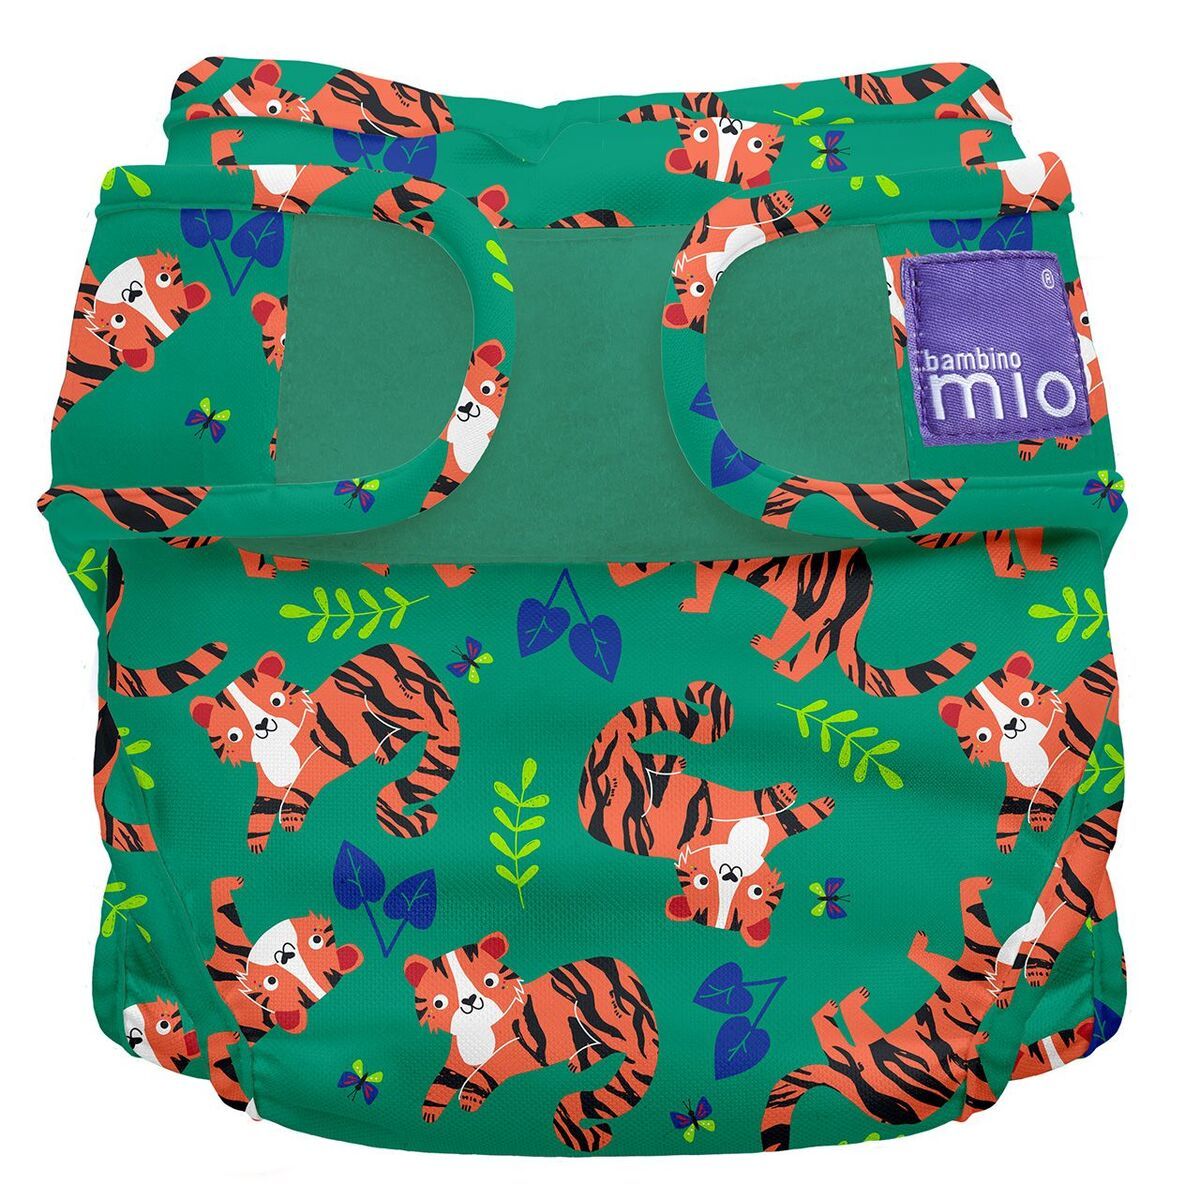 Bambino Mio| Mioduo Reusable Nappy Cover | Earthlets.com |  | reusable nappies nappy covers